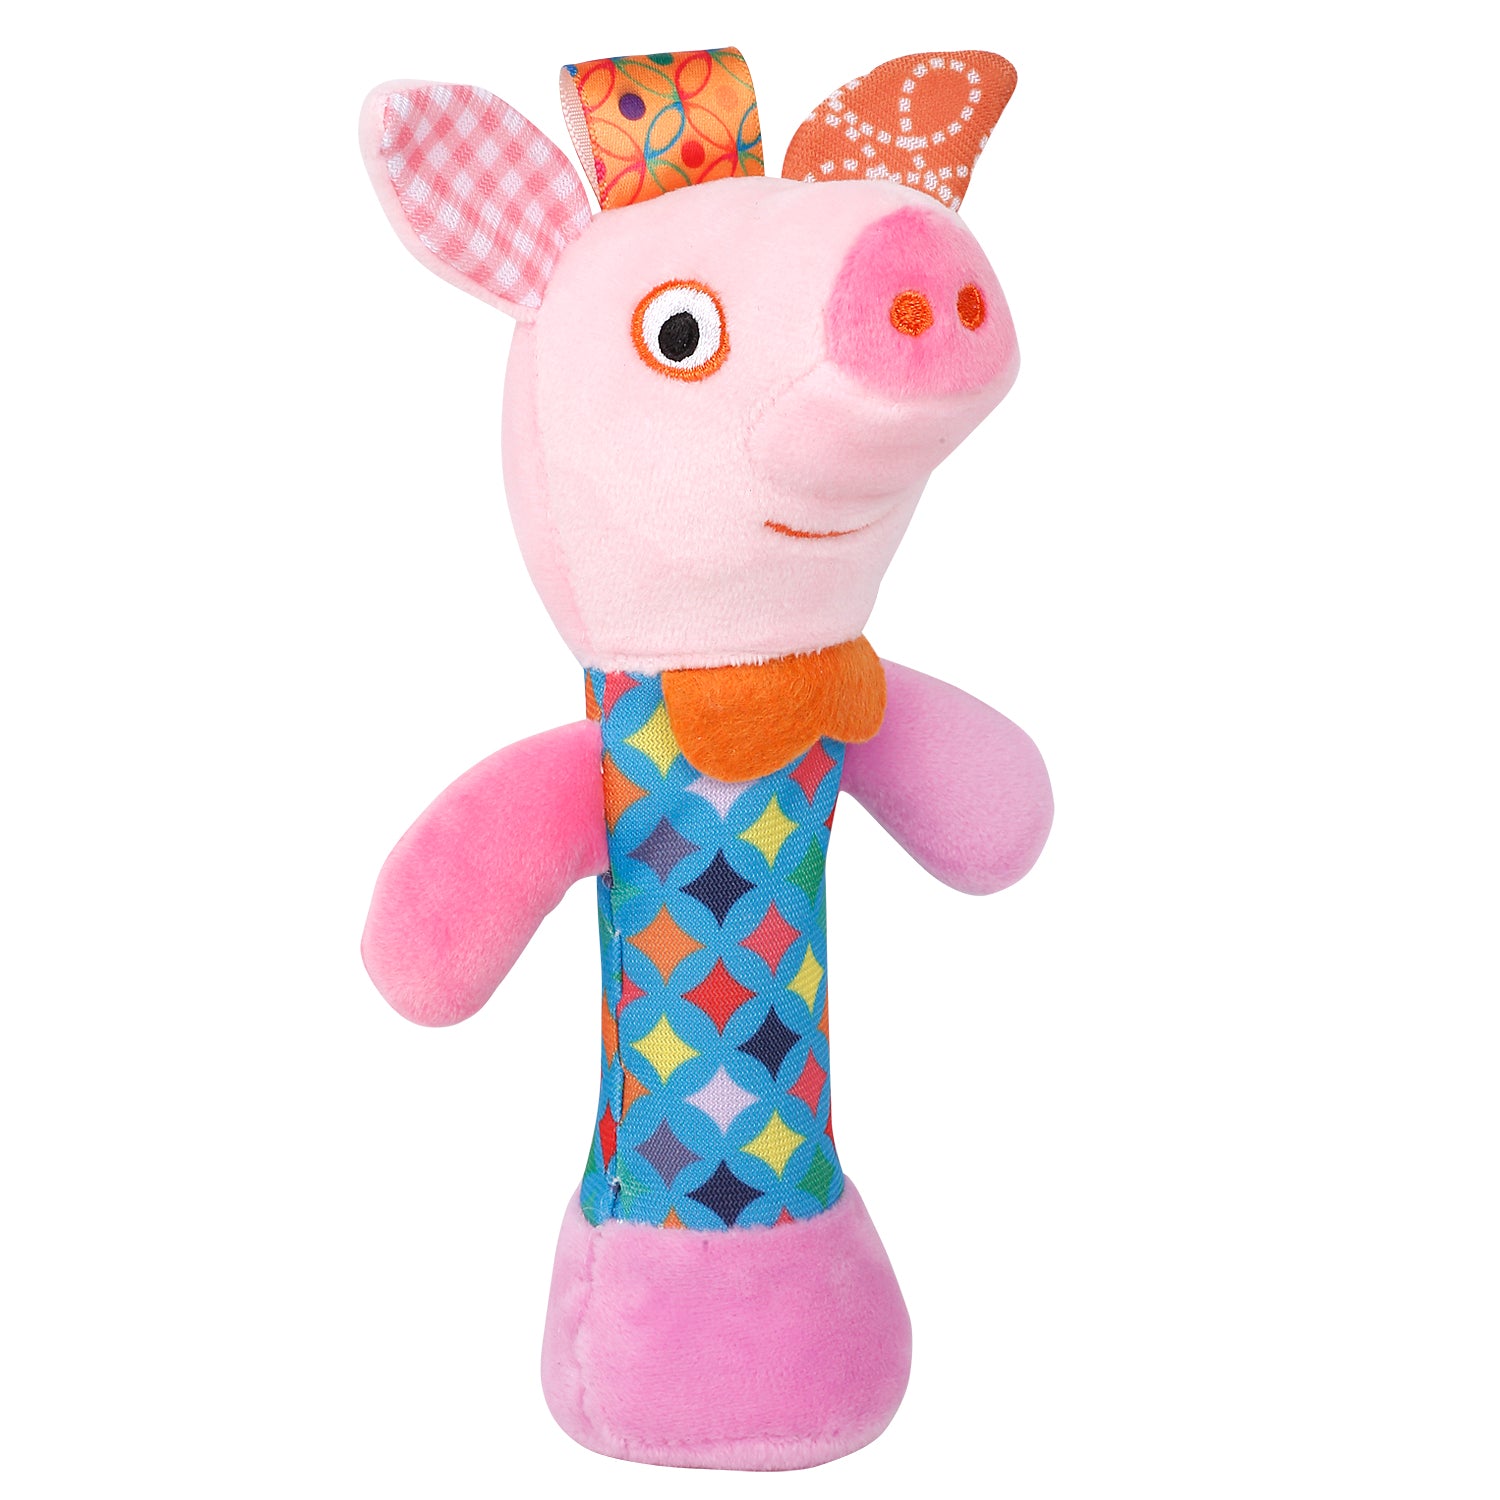 Mr. Piggy Pink Handheld Rattle Toy - Baby Moo